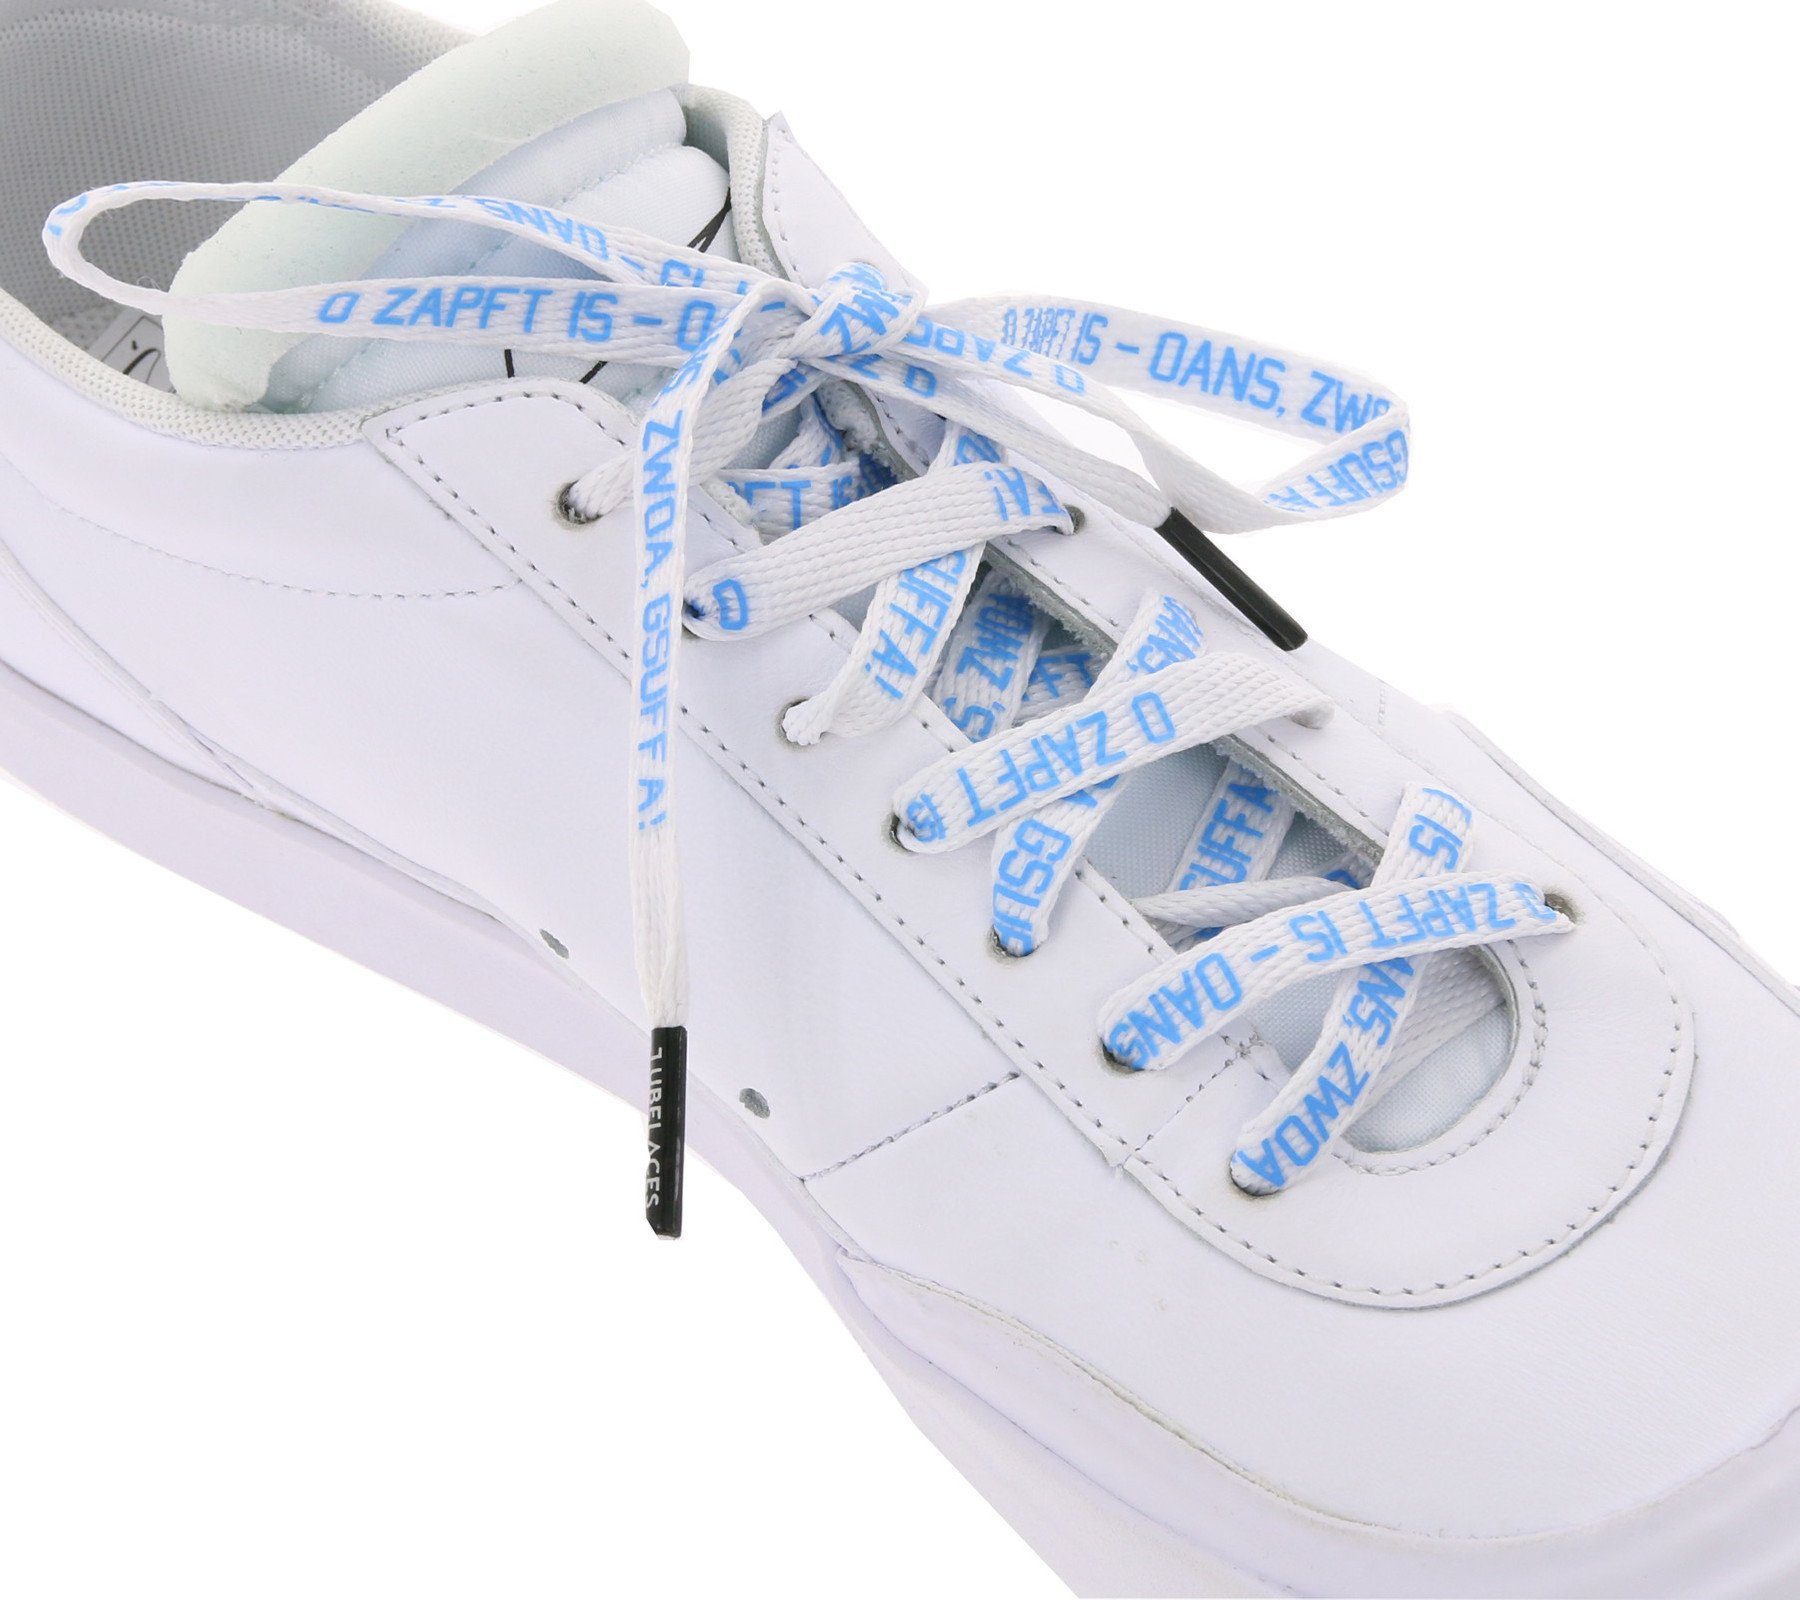 Tubelaces Schnürsenkel TubeLaces Schuhe Schnürbänder witzige Schnürsenkel Schuhbänder O´zapft is Weiß/Hellblau | Schnürsenkel